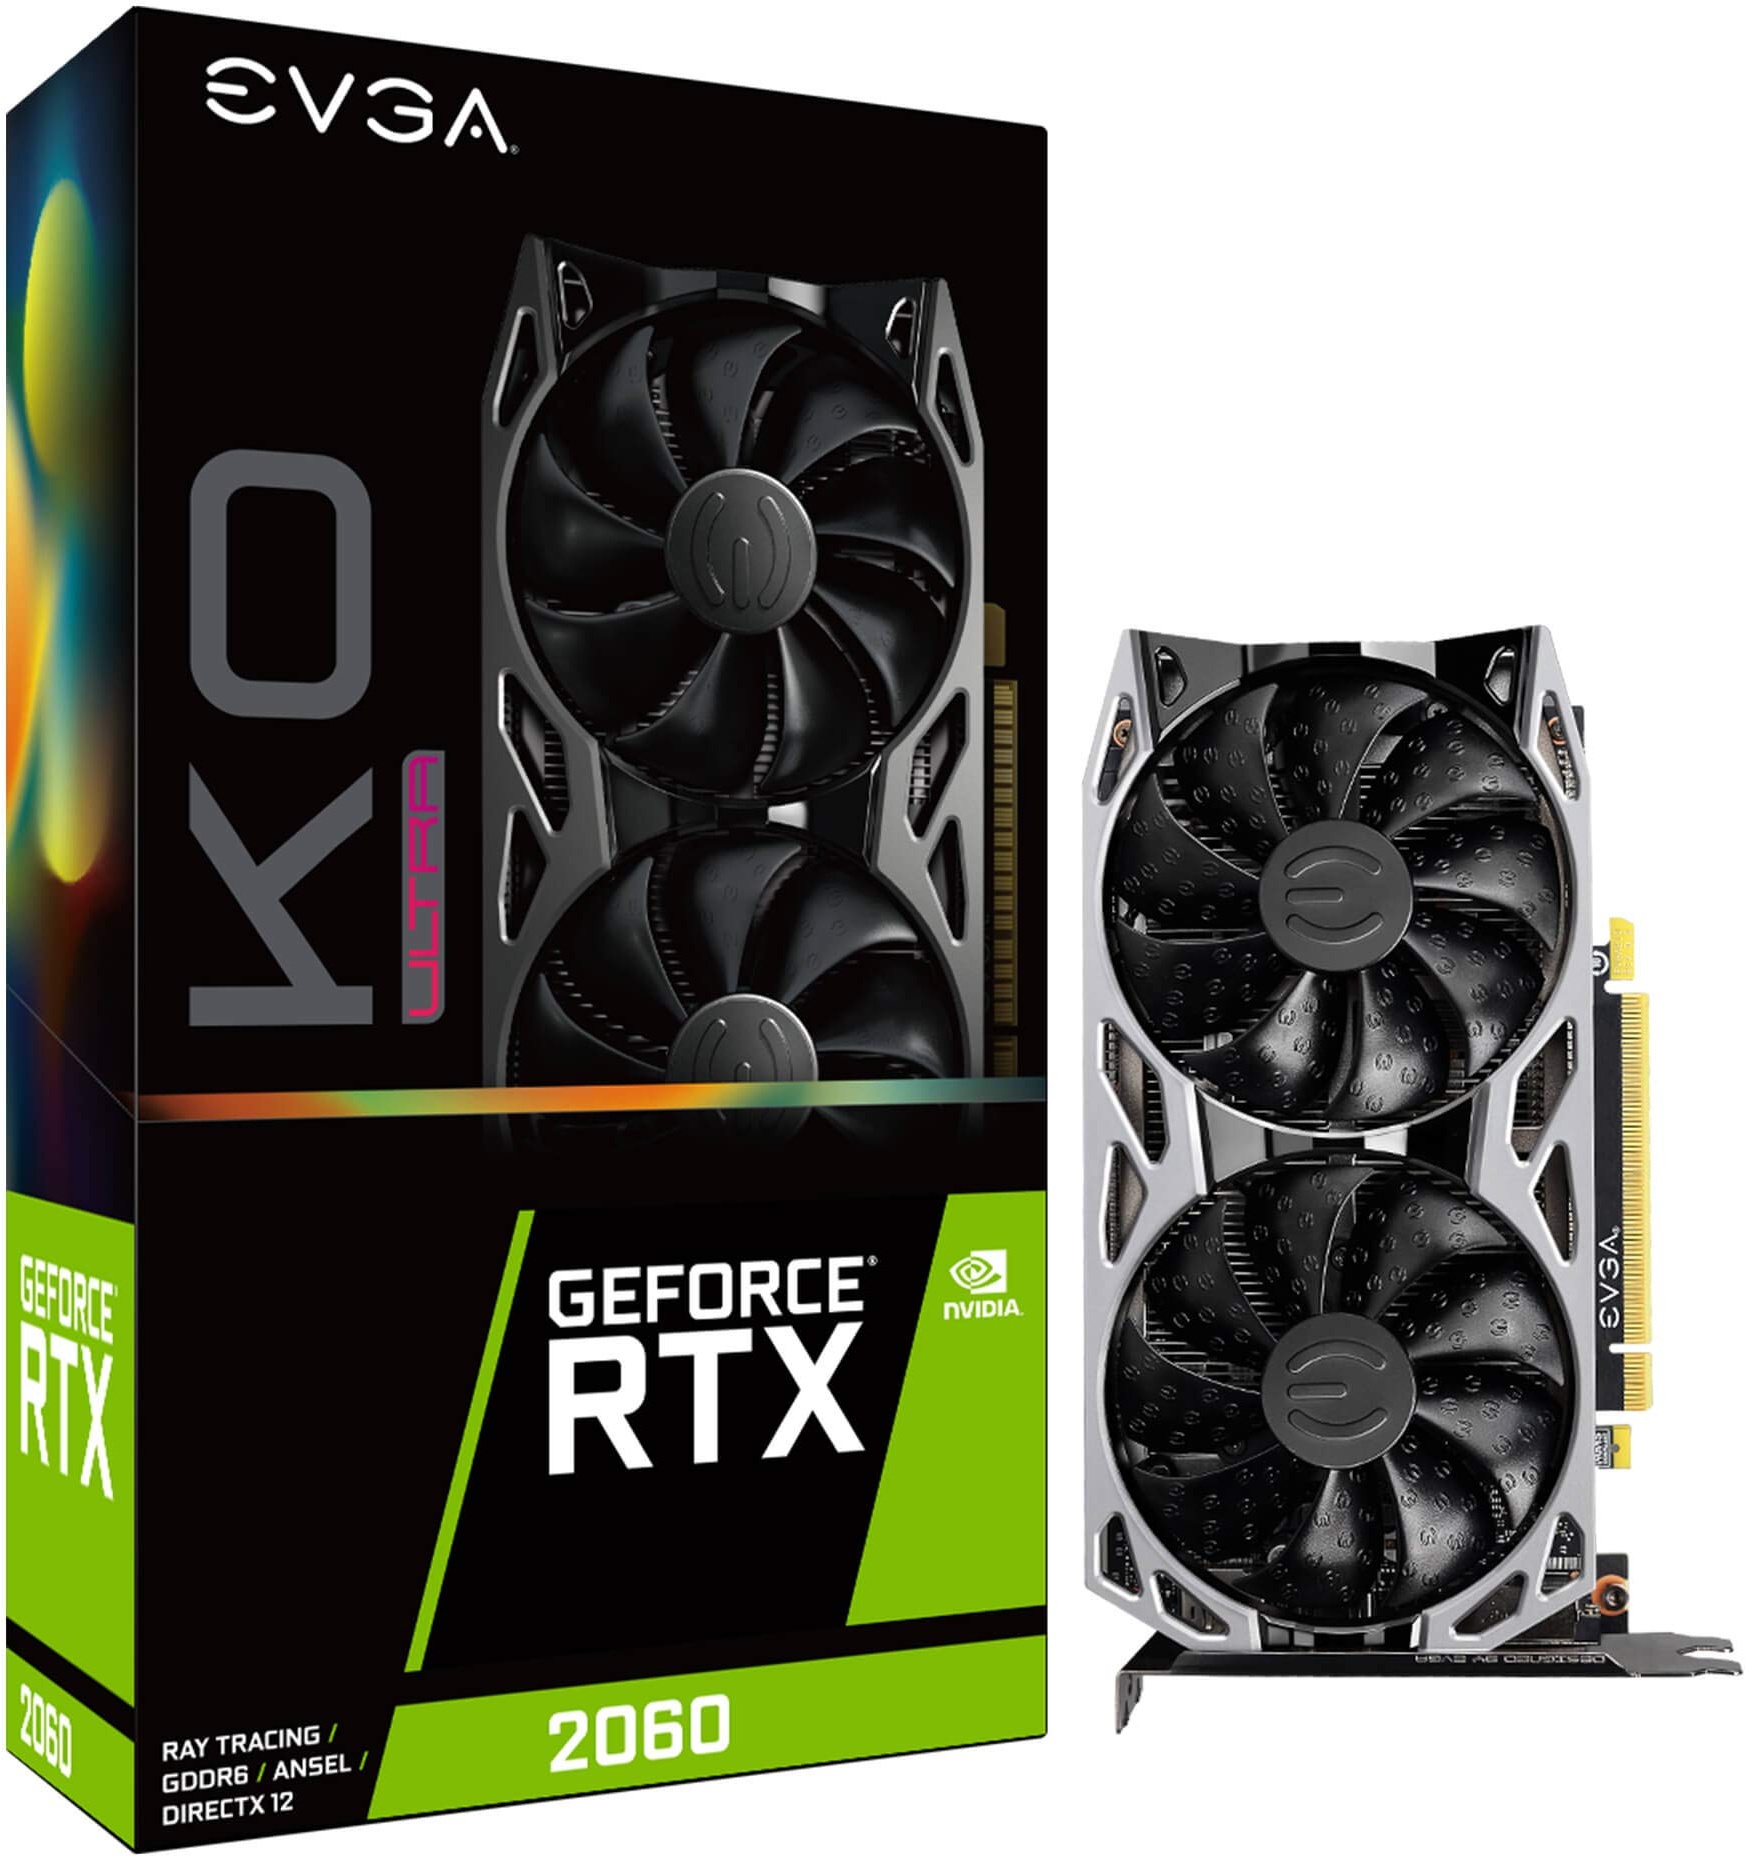 EVGA GeForce RTX 2060 KO Ultra Gaming, 06G-P4-2068-KR, 6 GB GDDR6, Dual Fans, Metal Backplate